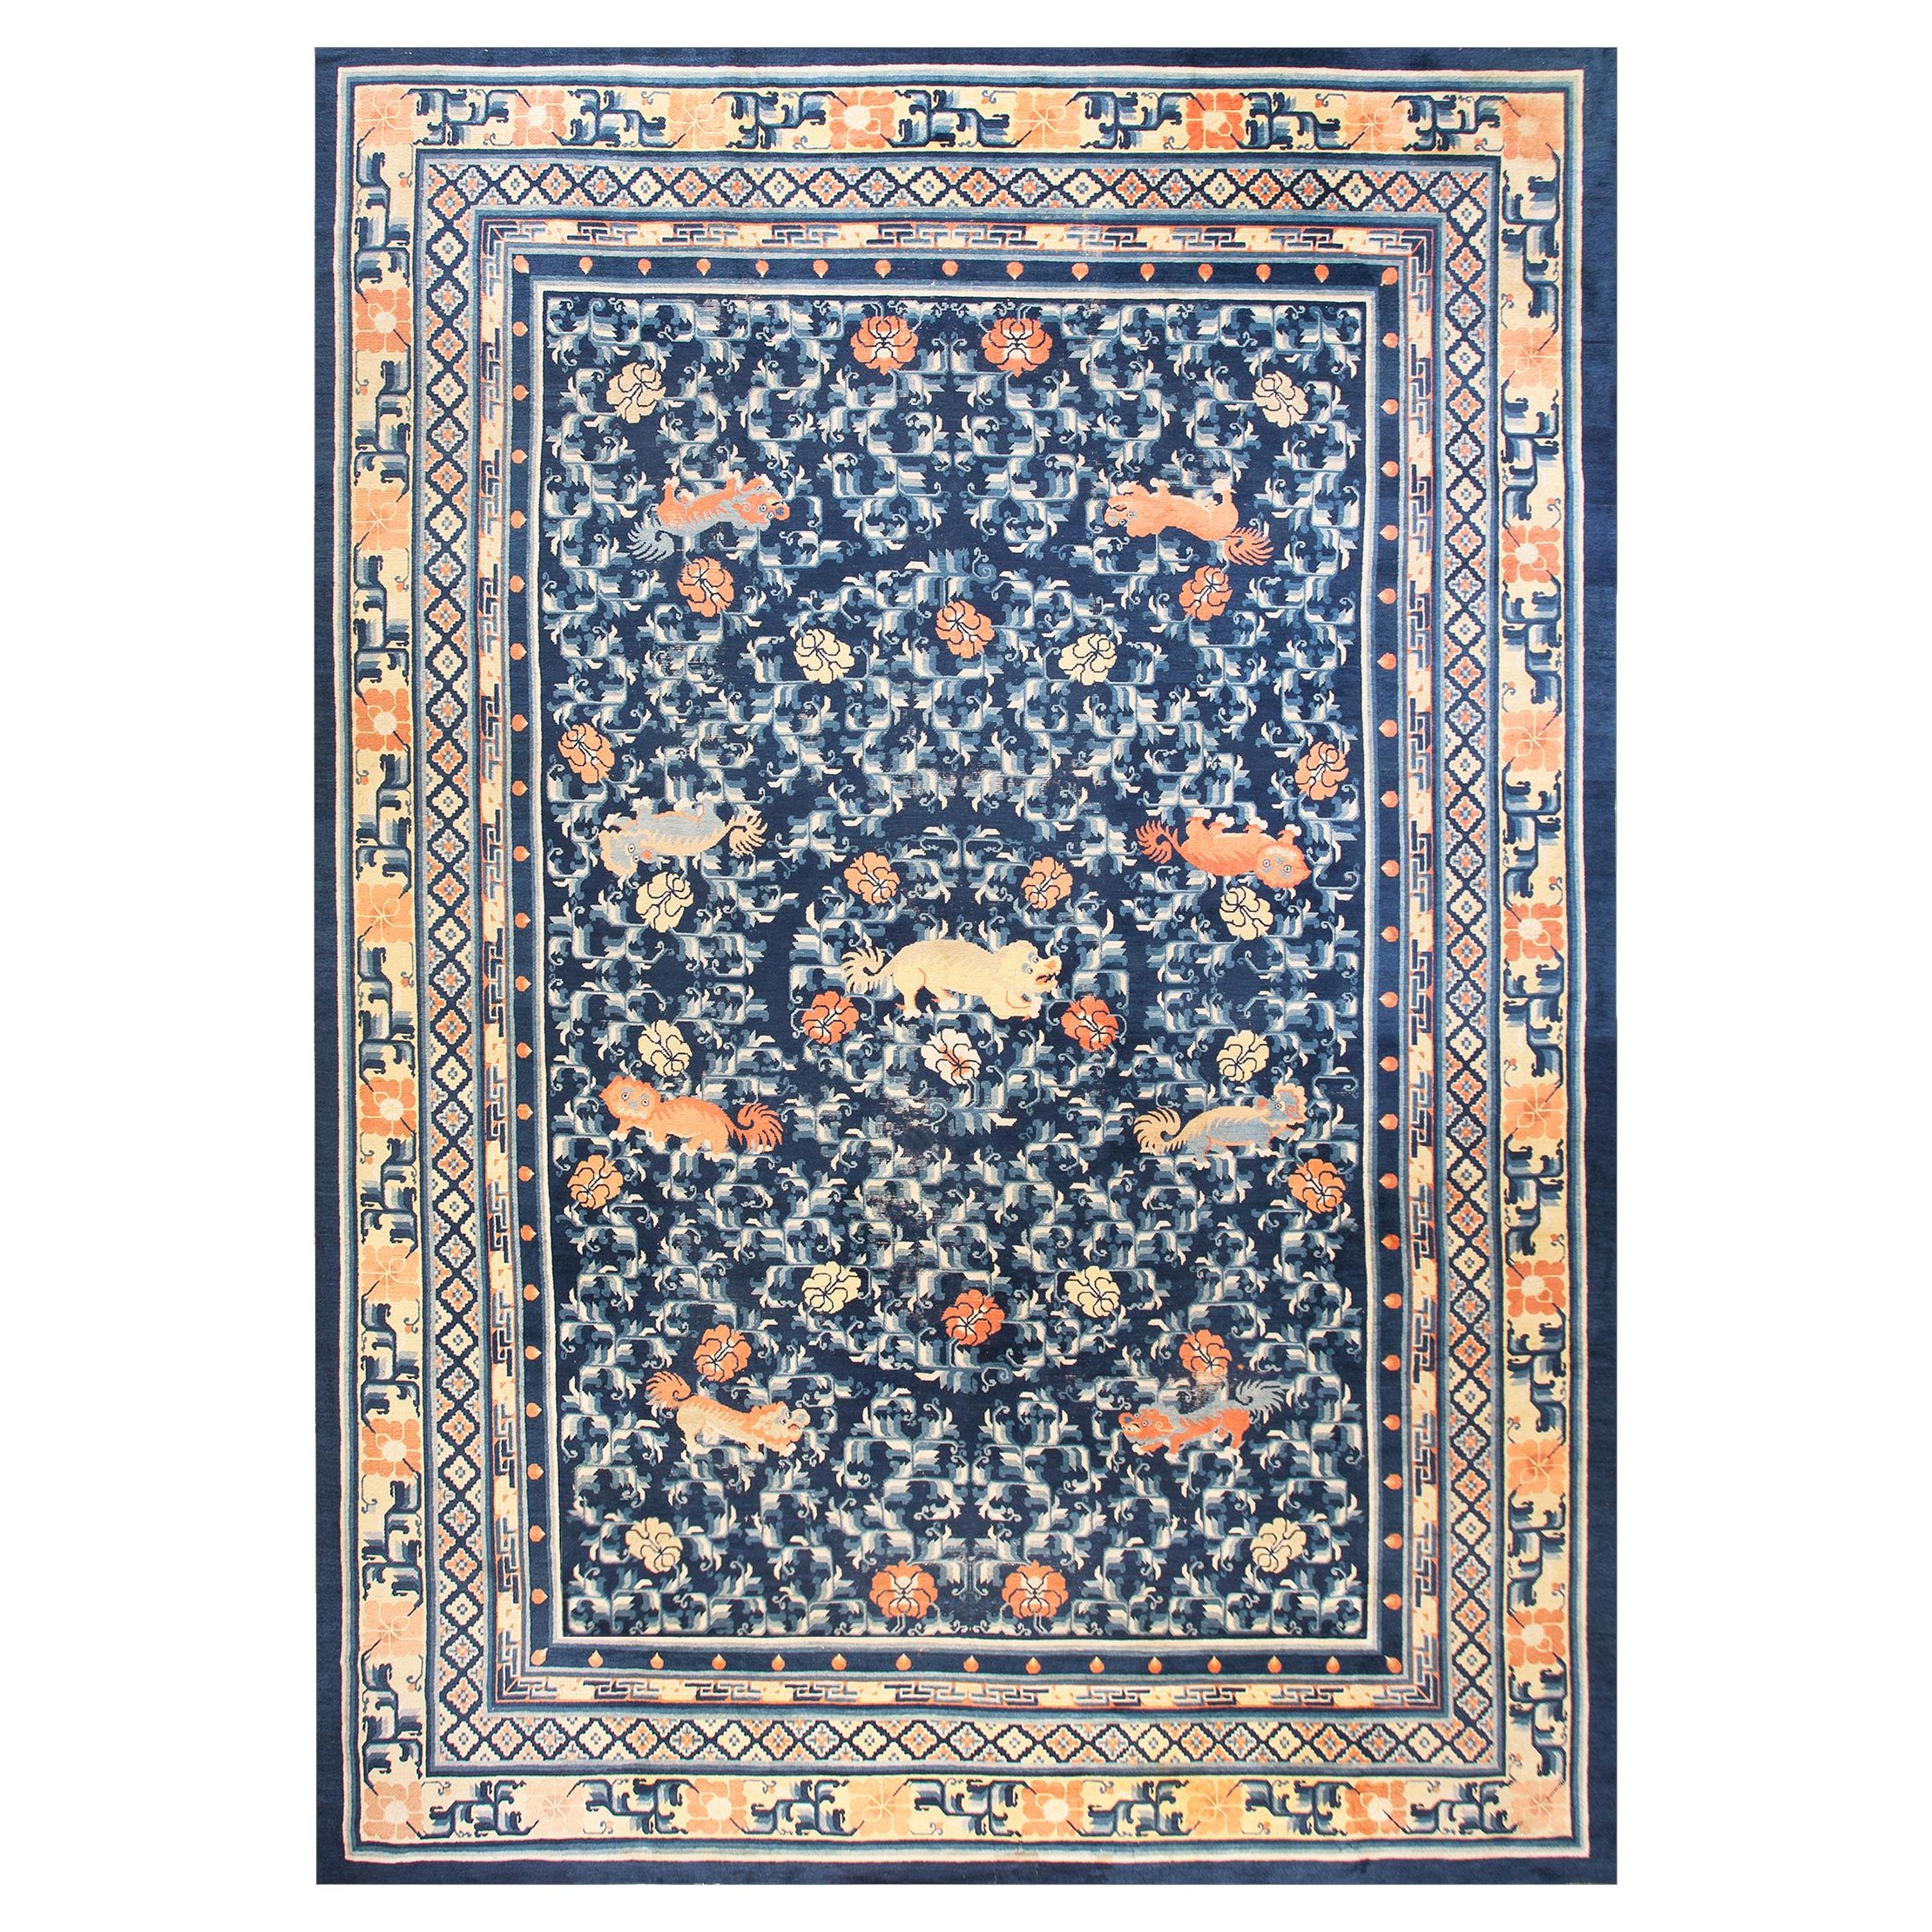 Mid 19th Century Chinese Ningxia Carpet ( 12' 6" x 18' 2" - 380 x 555)